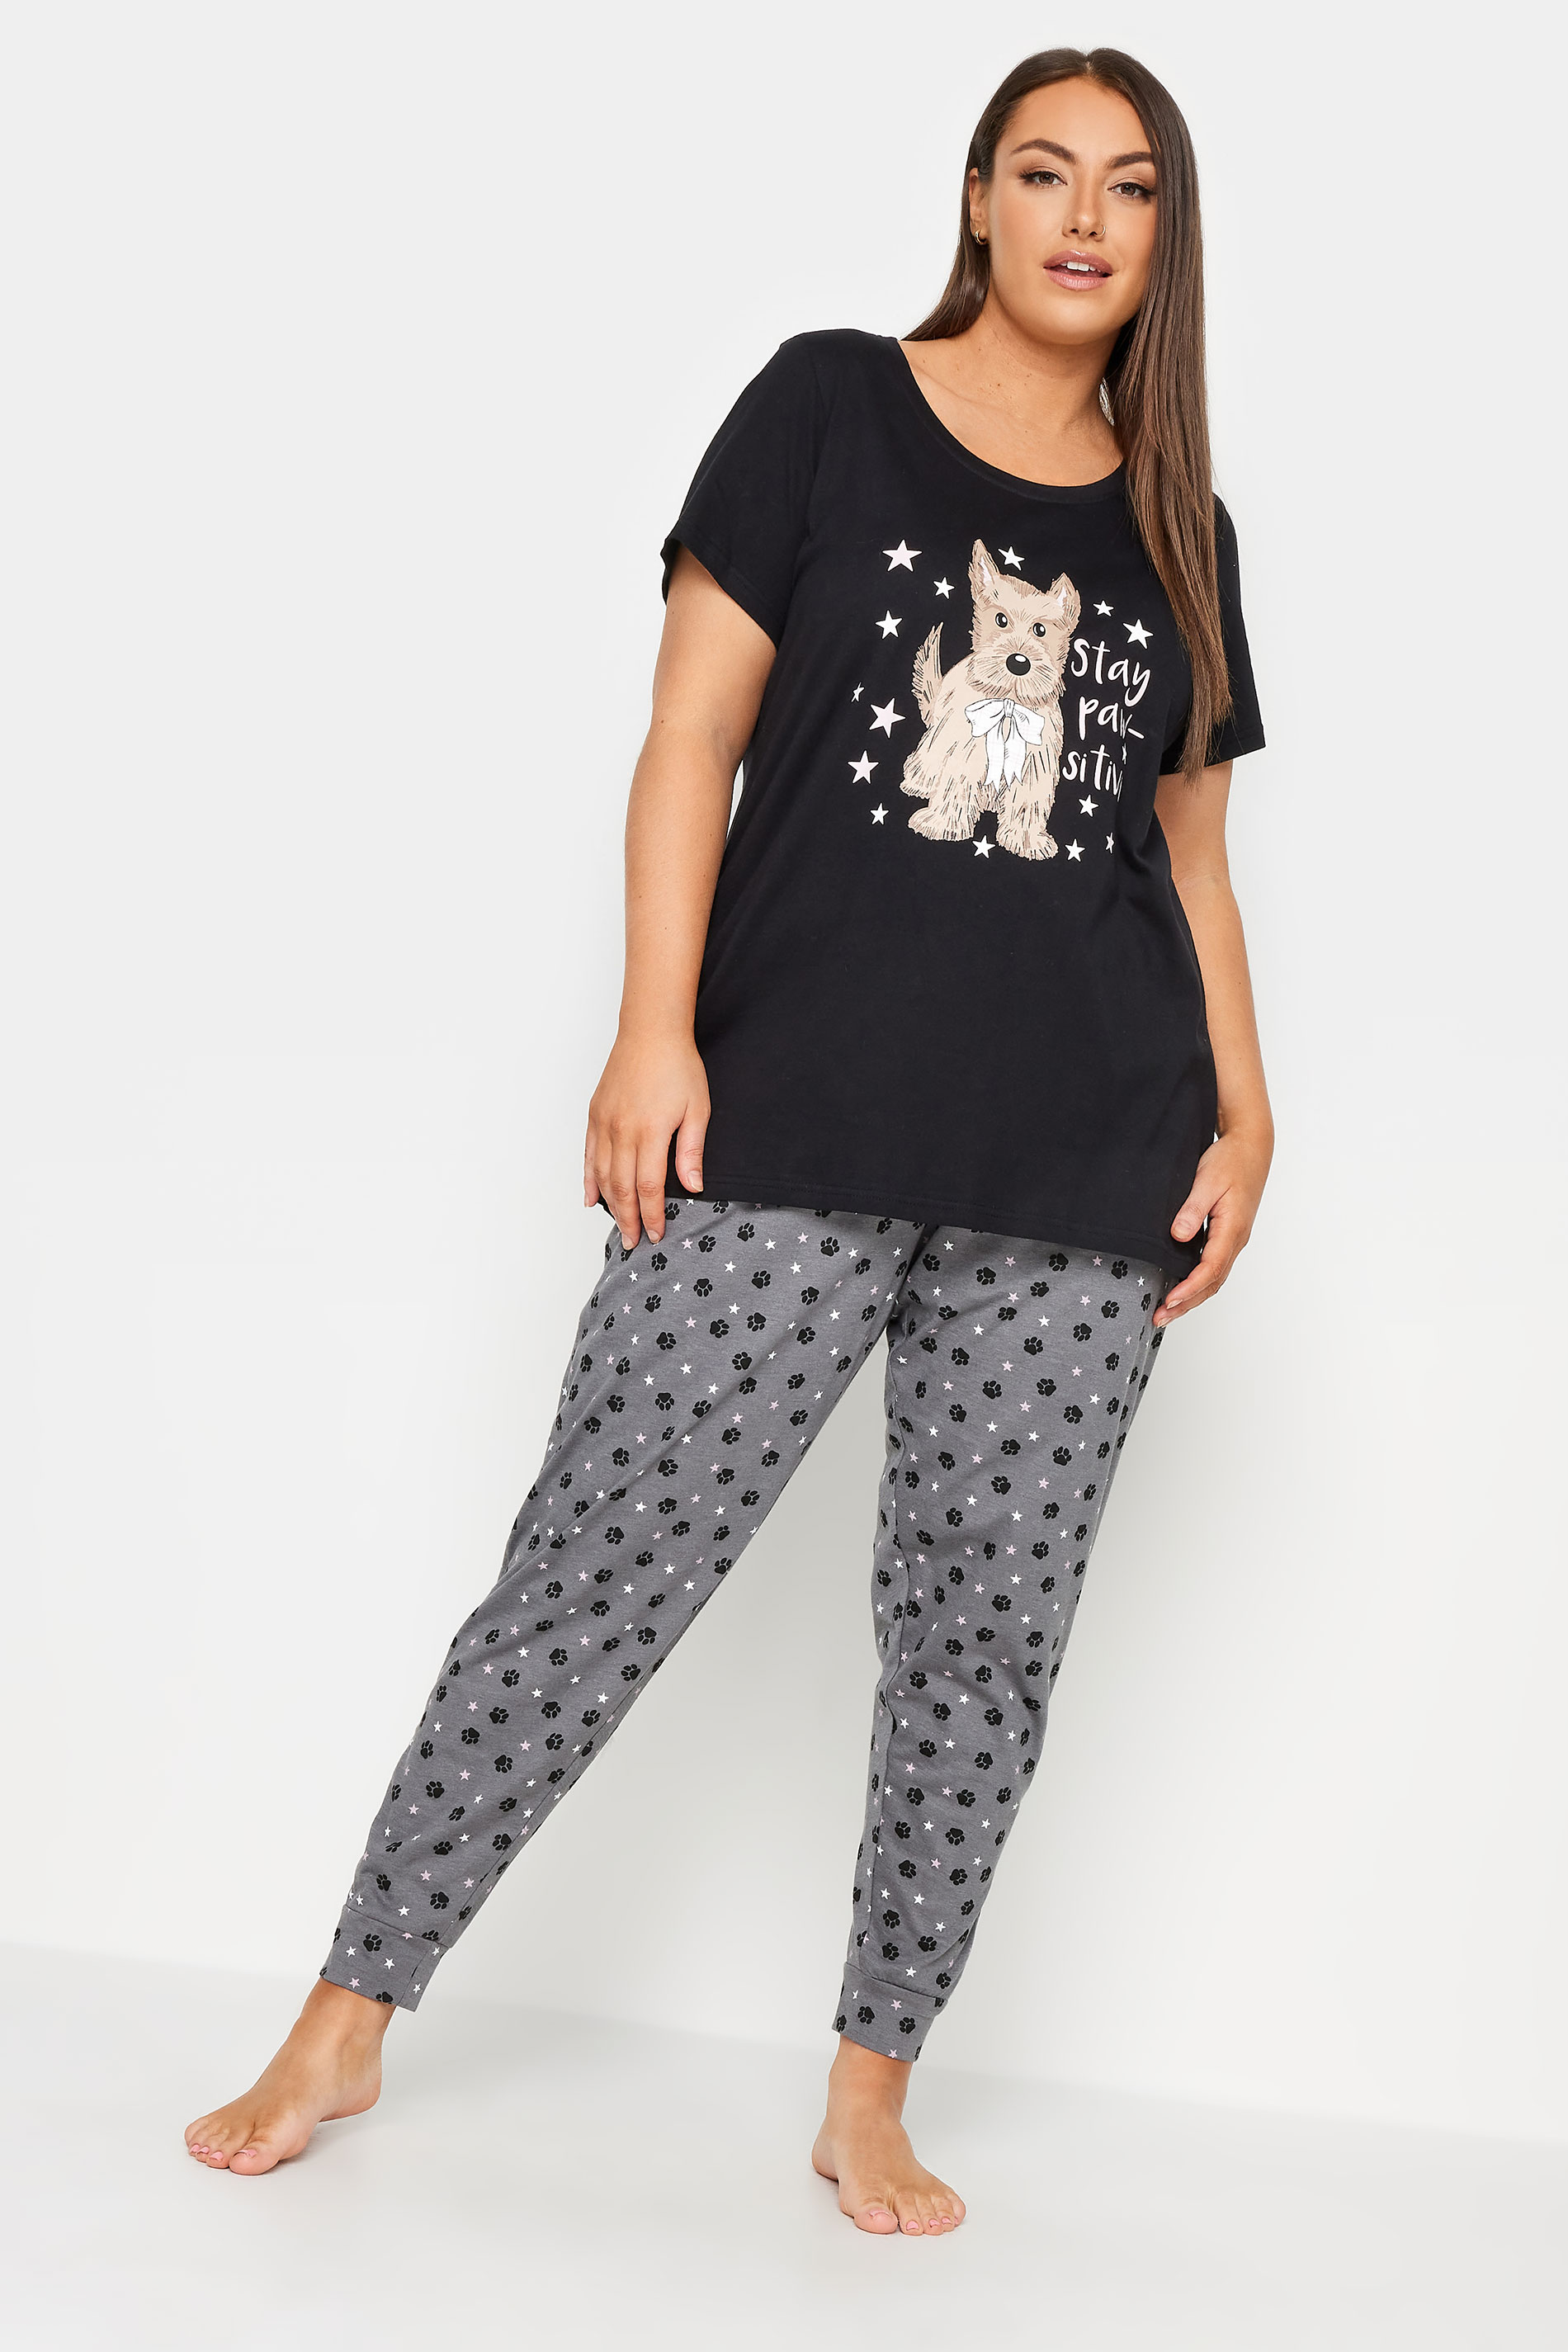 YOURS Plus Size Black 'Stay Paw-sitive' Slogan Pyjama Set | Yours Clothing 2